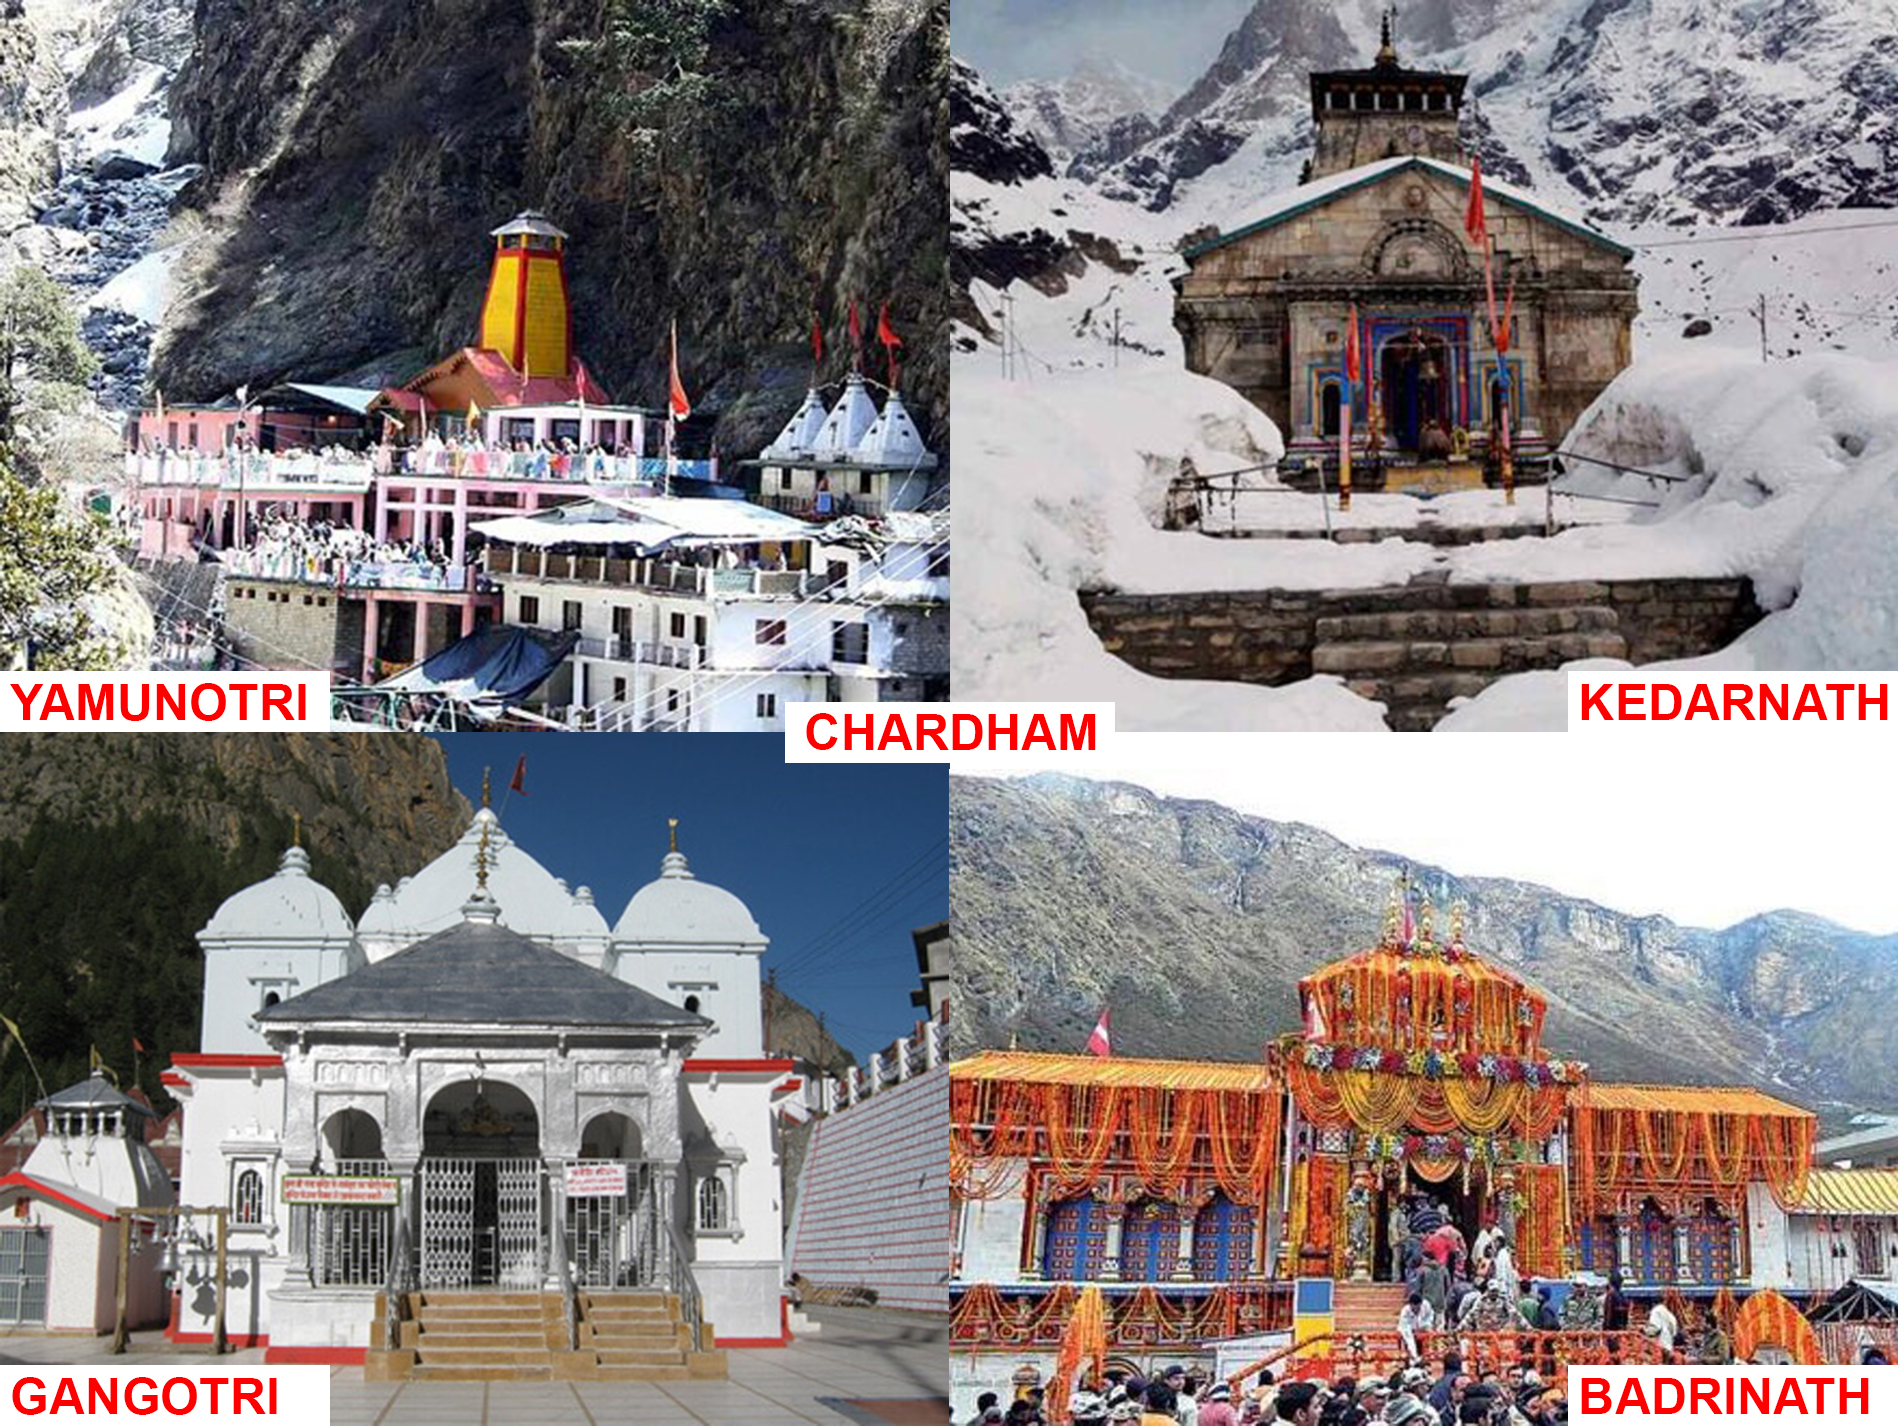 Uttarakhand Char Dham Yatra 2019 - An Essential Travel Guide